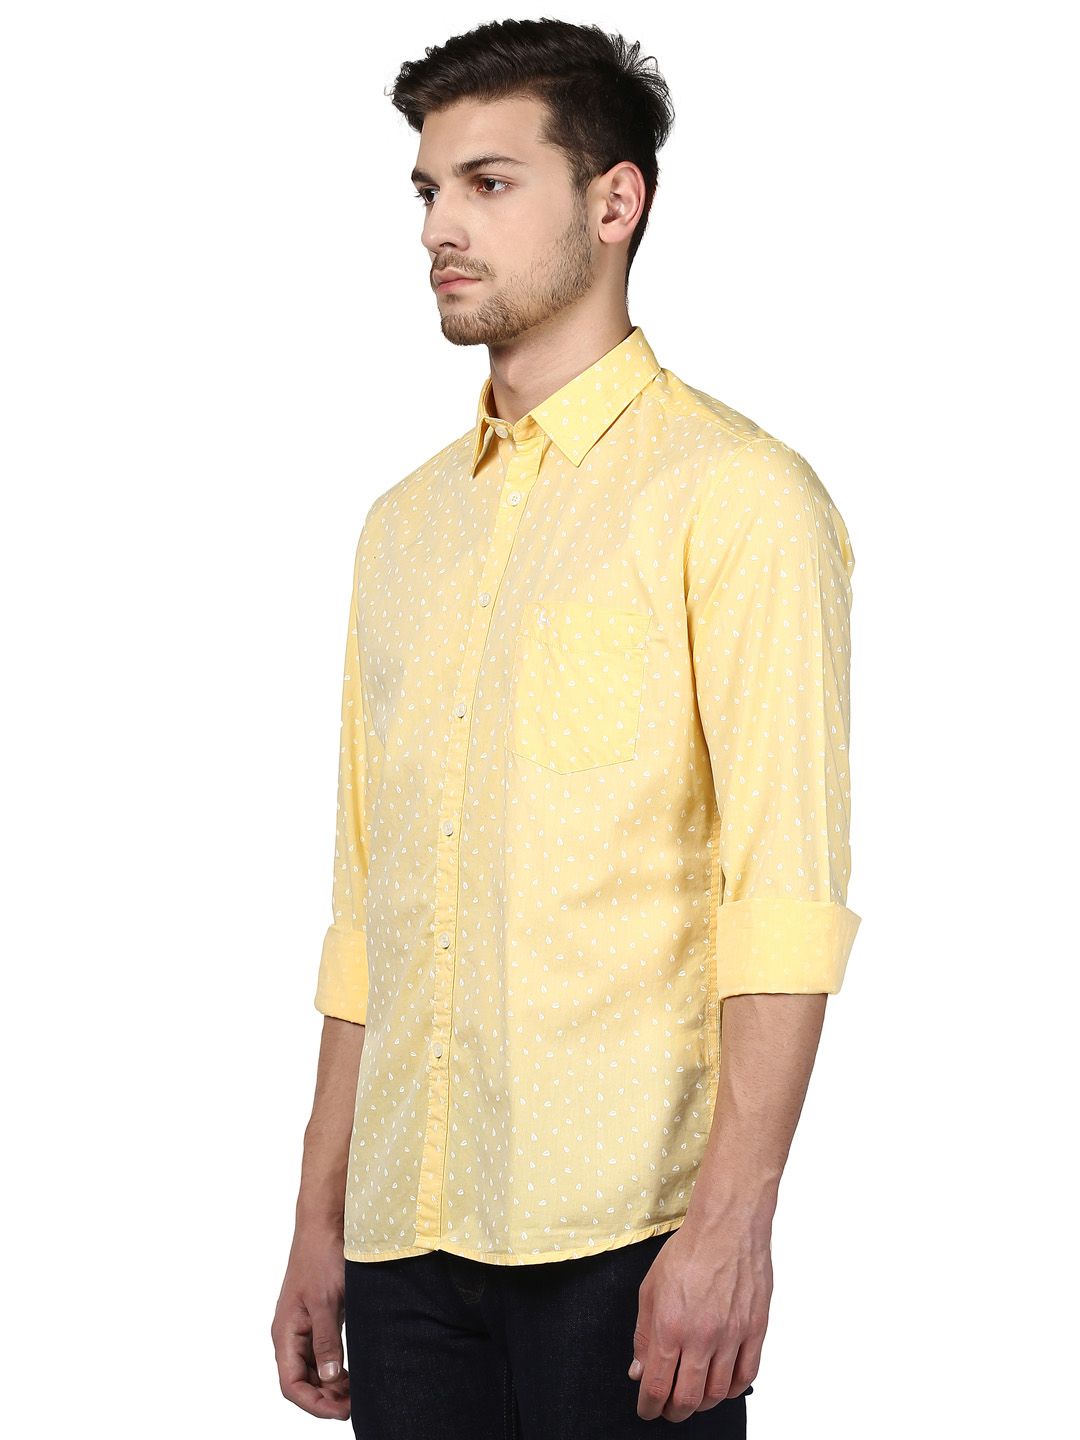 Parx Yellow Slim Fit Shirt - Buy Parx Yellow Slim Fit Shirt Online at ...